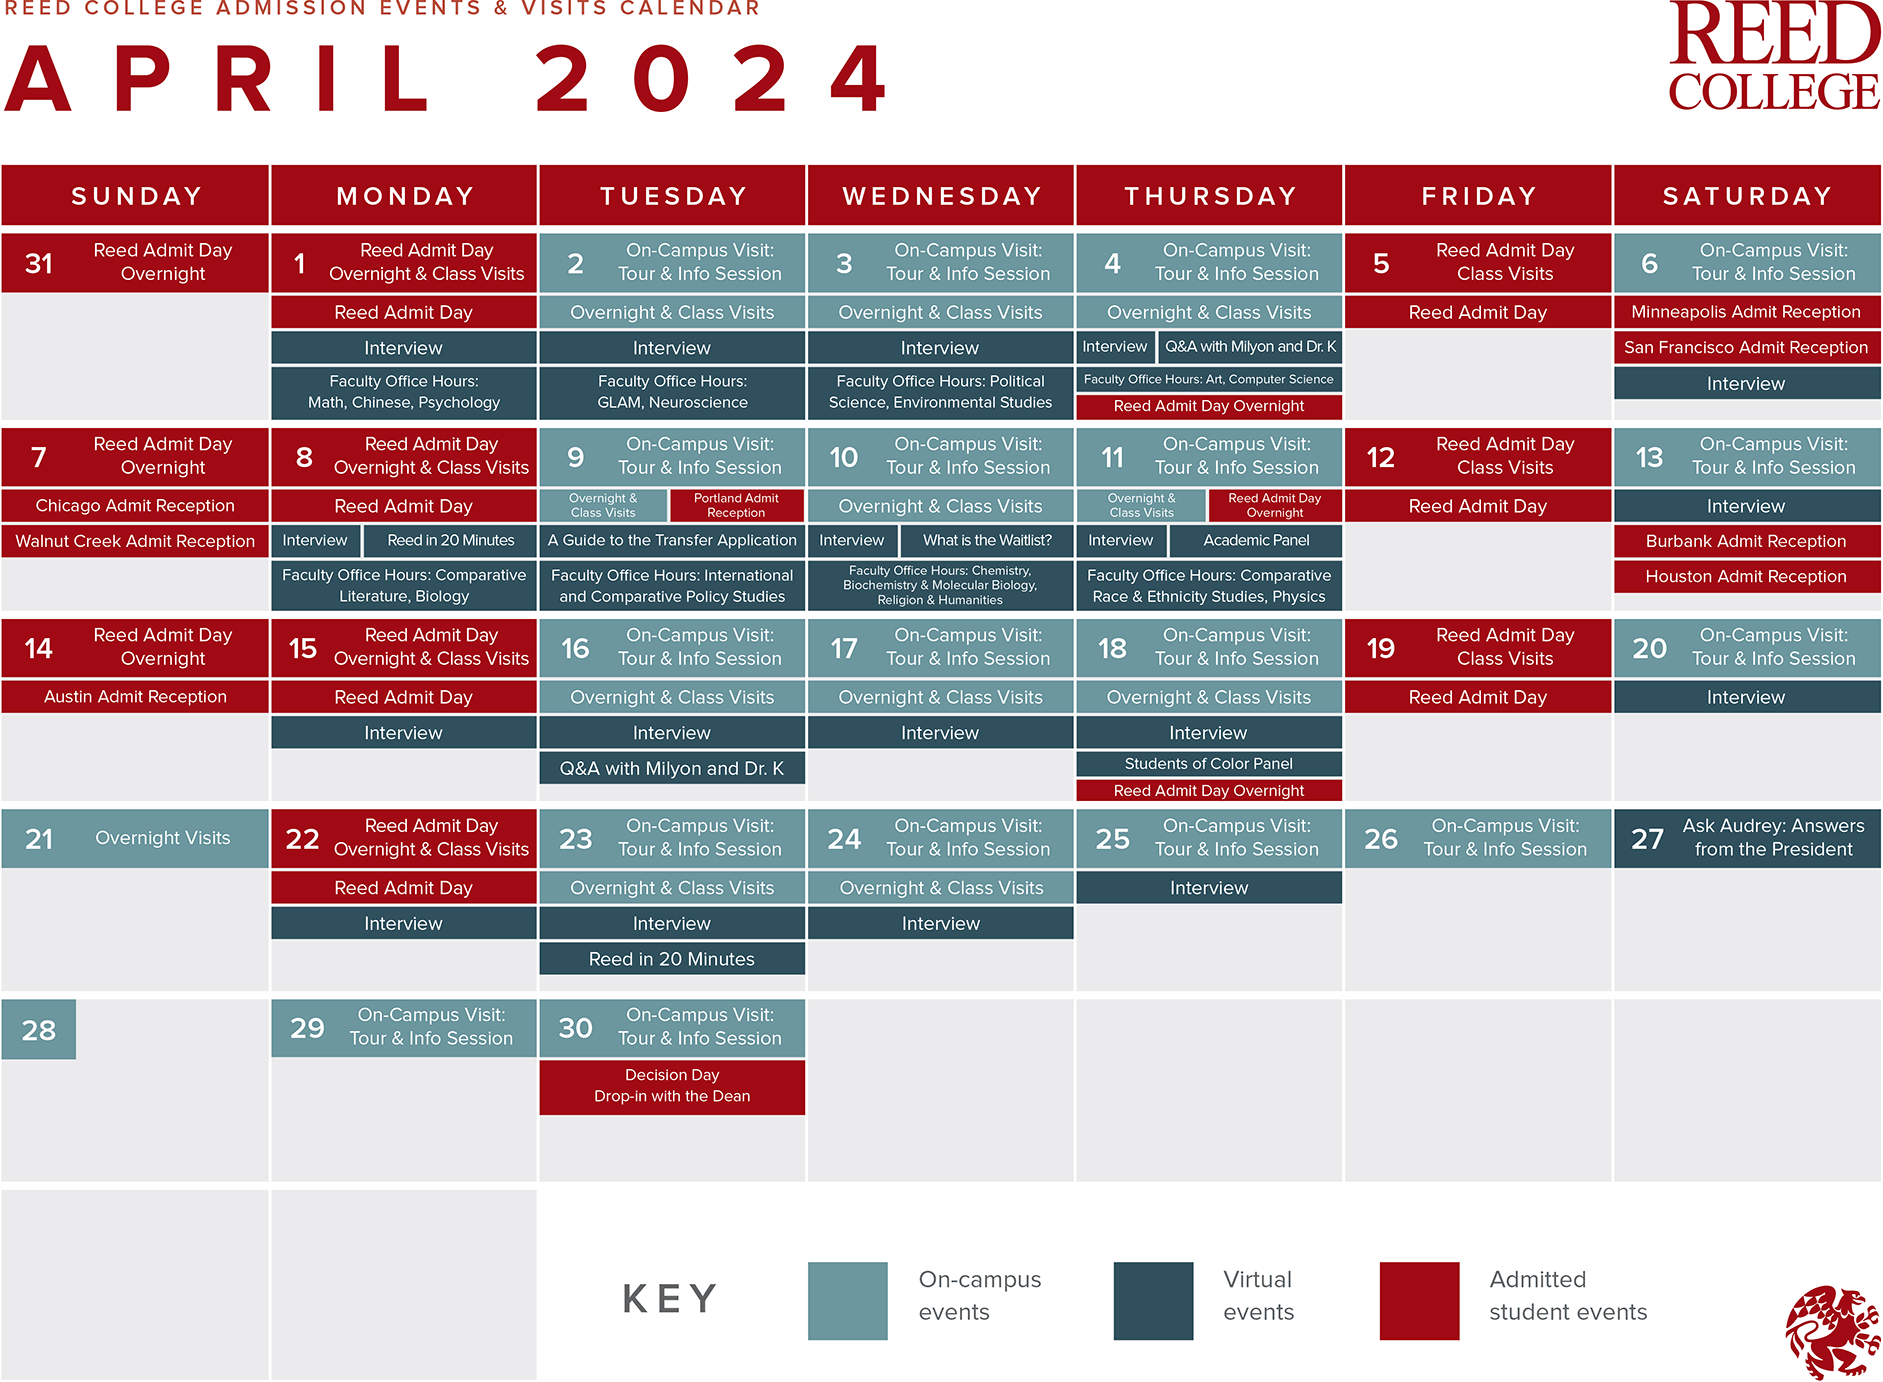 April 2024 Admission events calendar